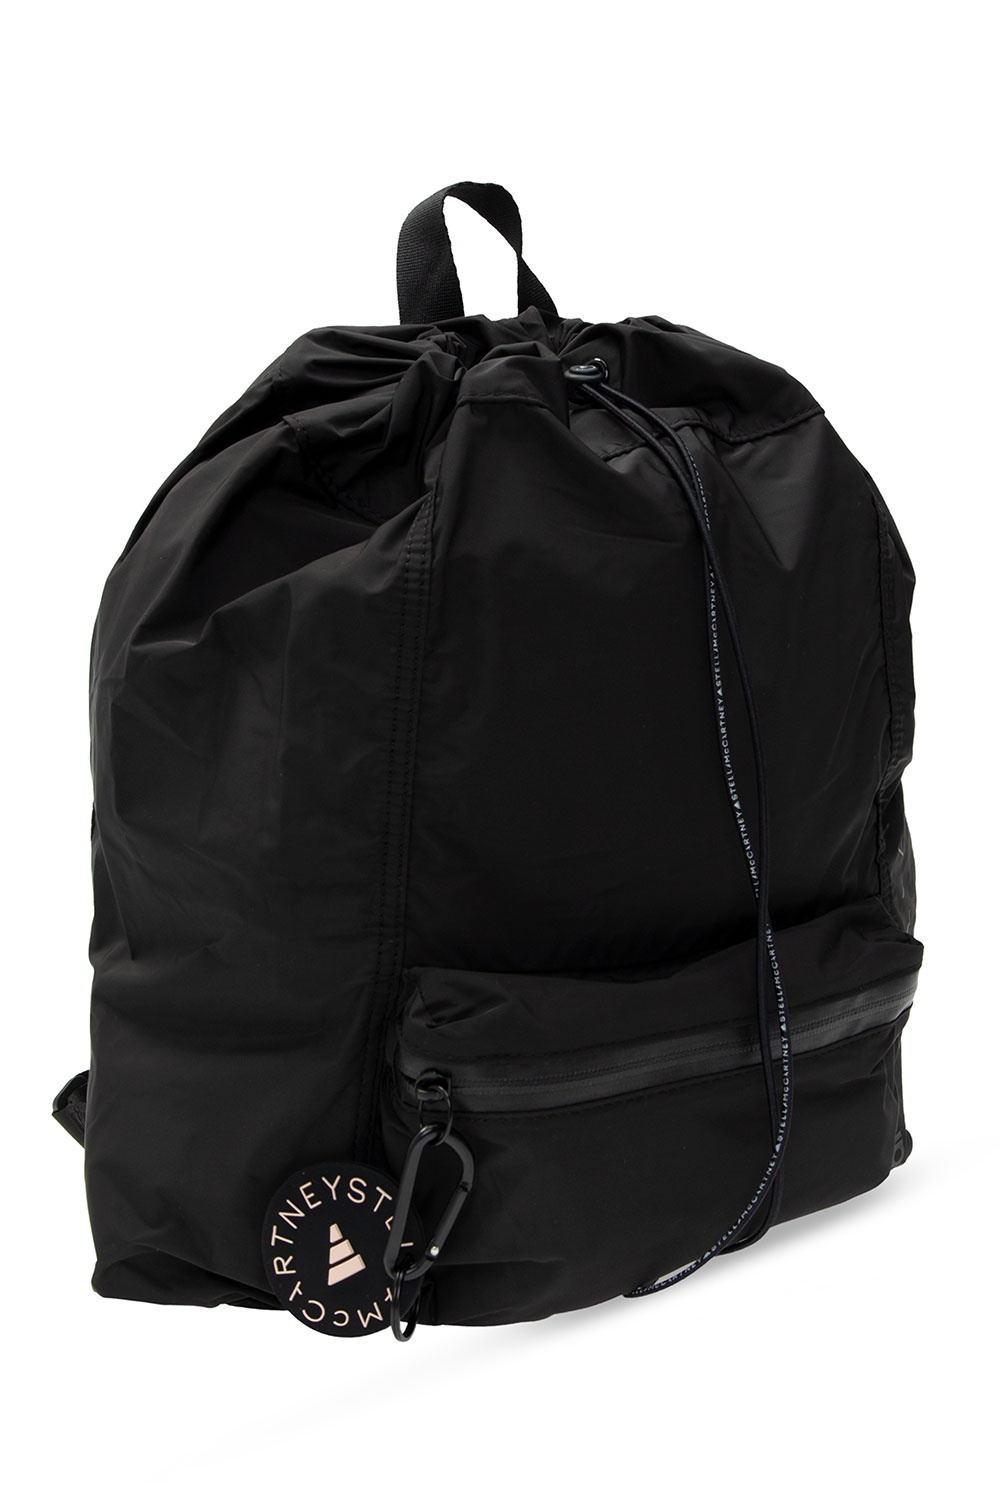 Adidas By Stella Mccartney Backpack With Logo Women S Bags Vitkac